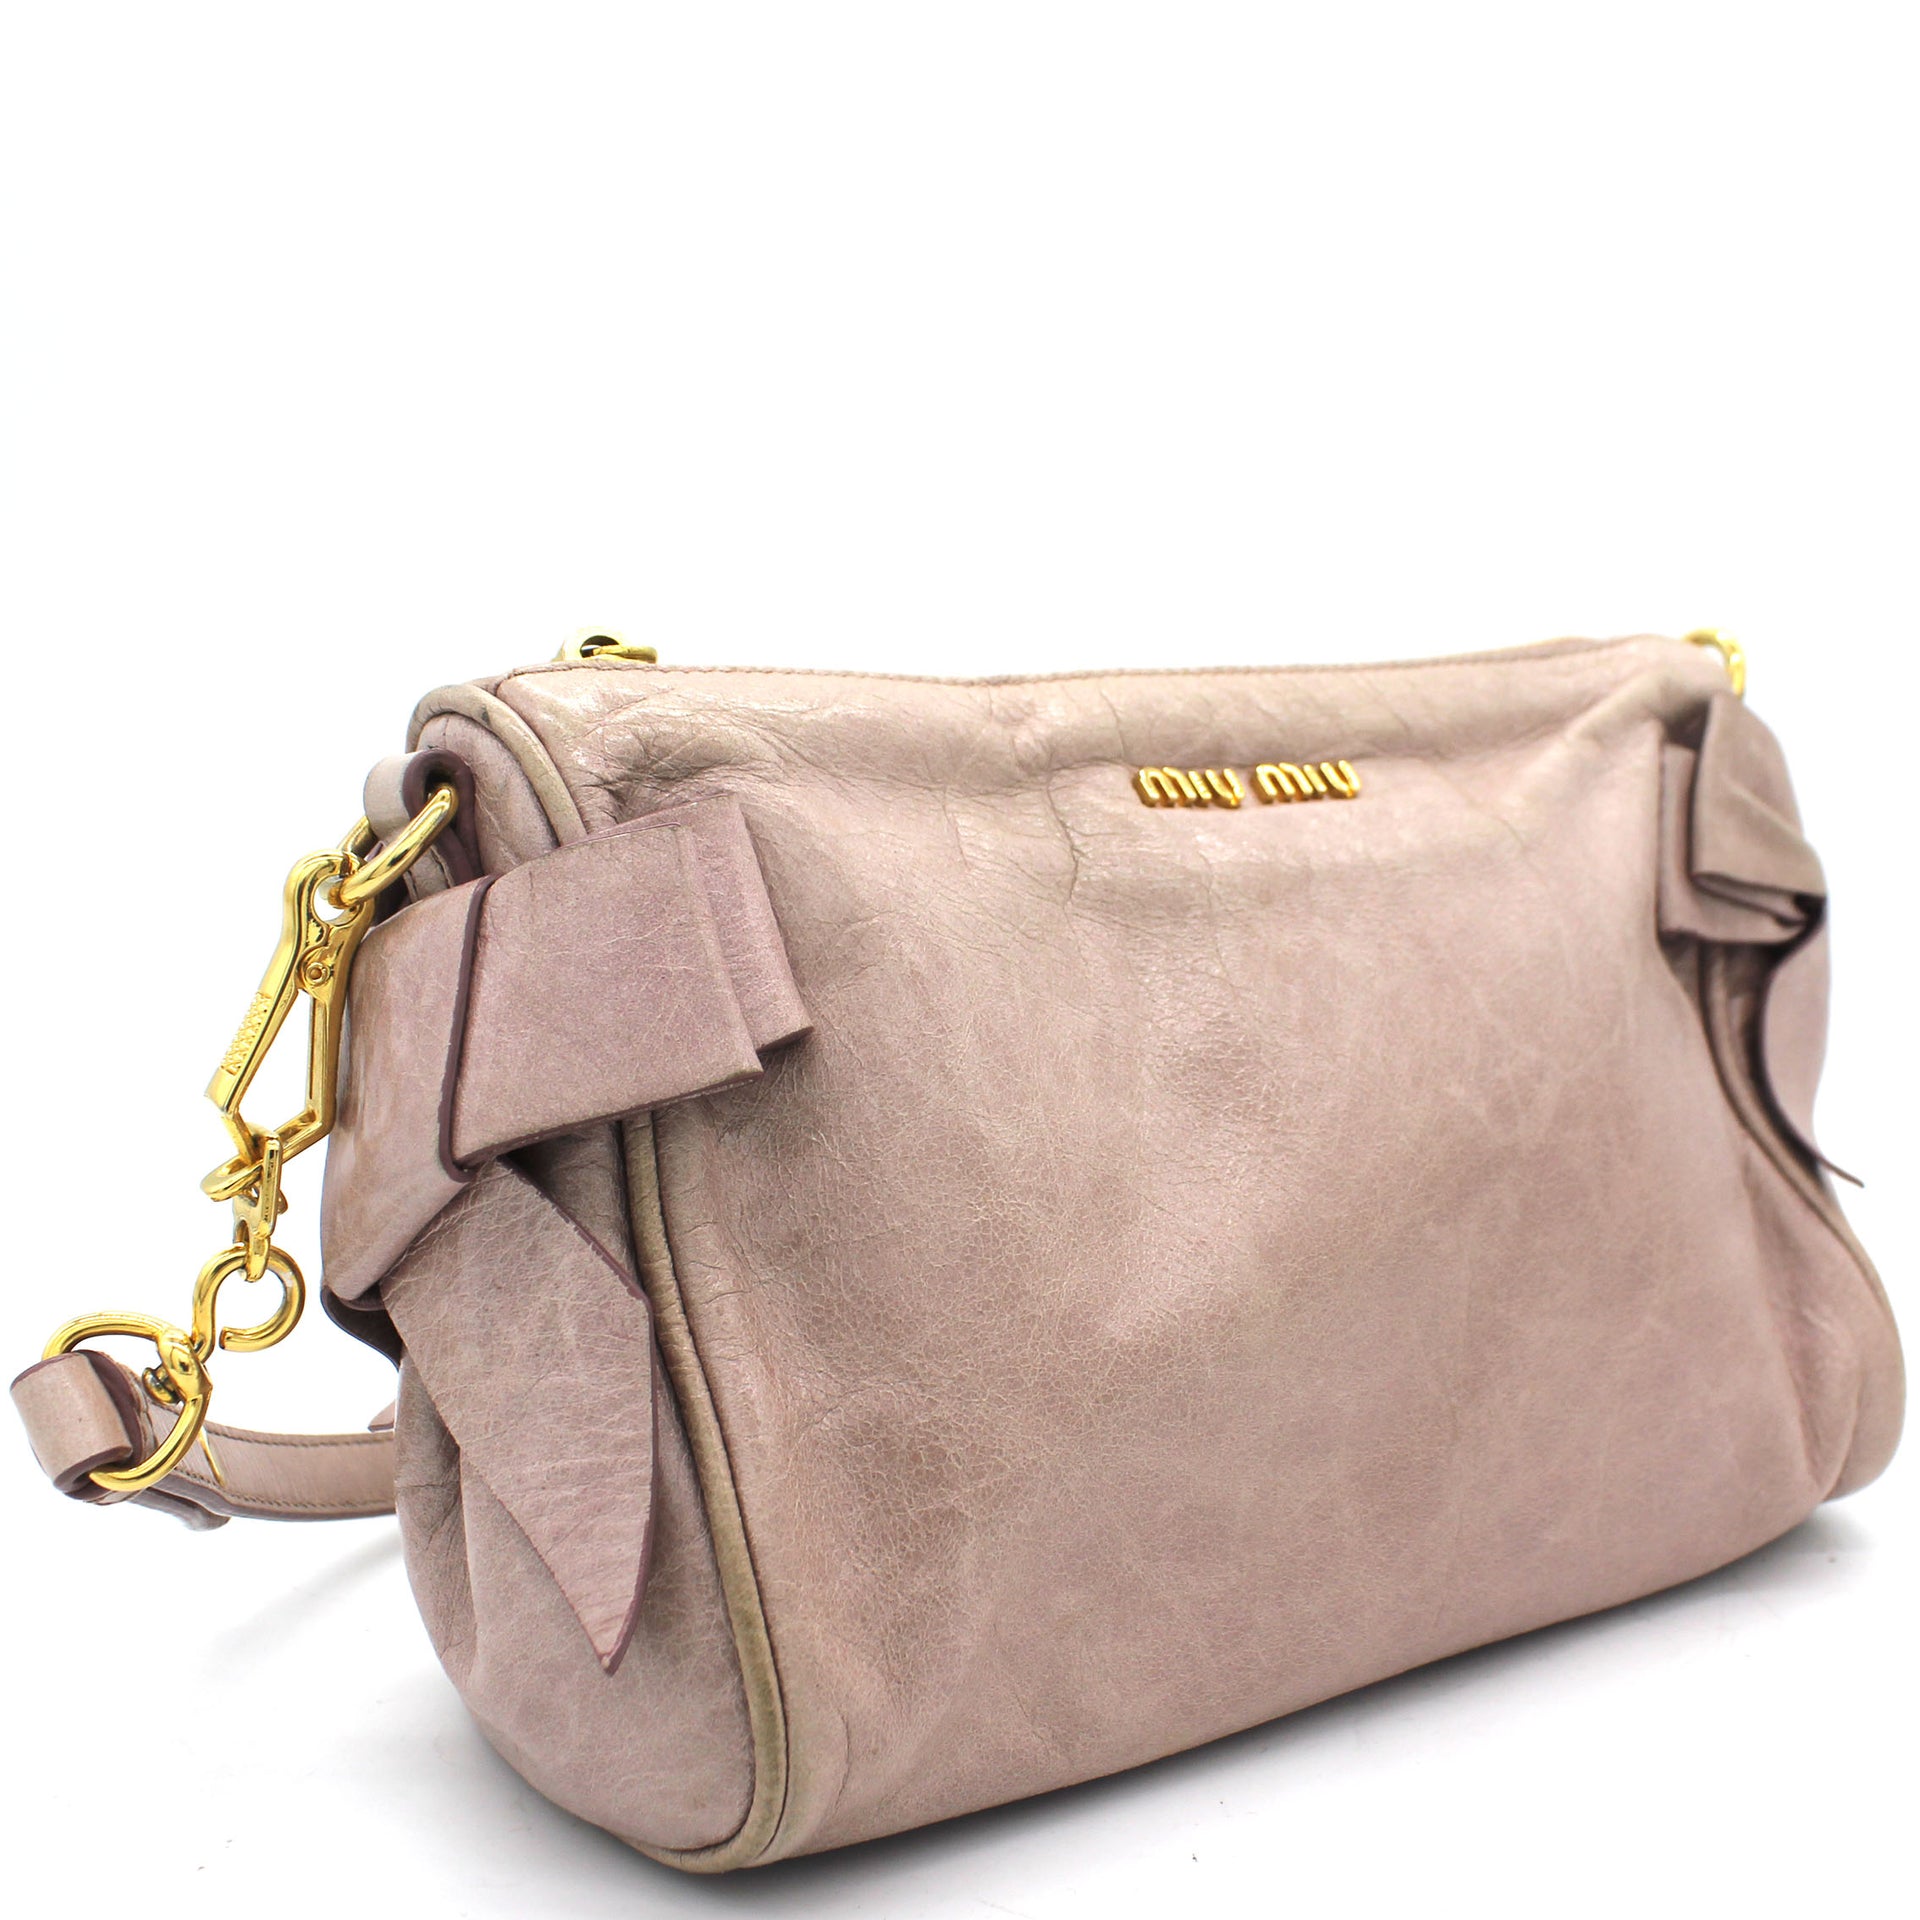 Authentic Miu Miu Prada Vitello Lux Vitello Mini Bow Handbag Bag